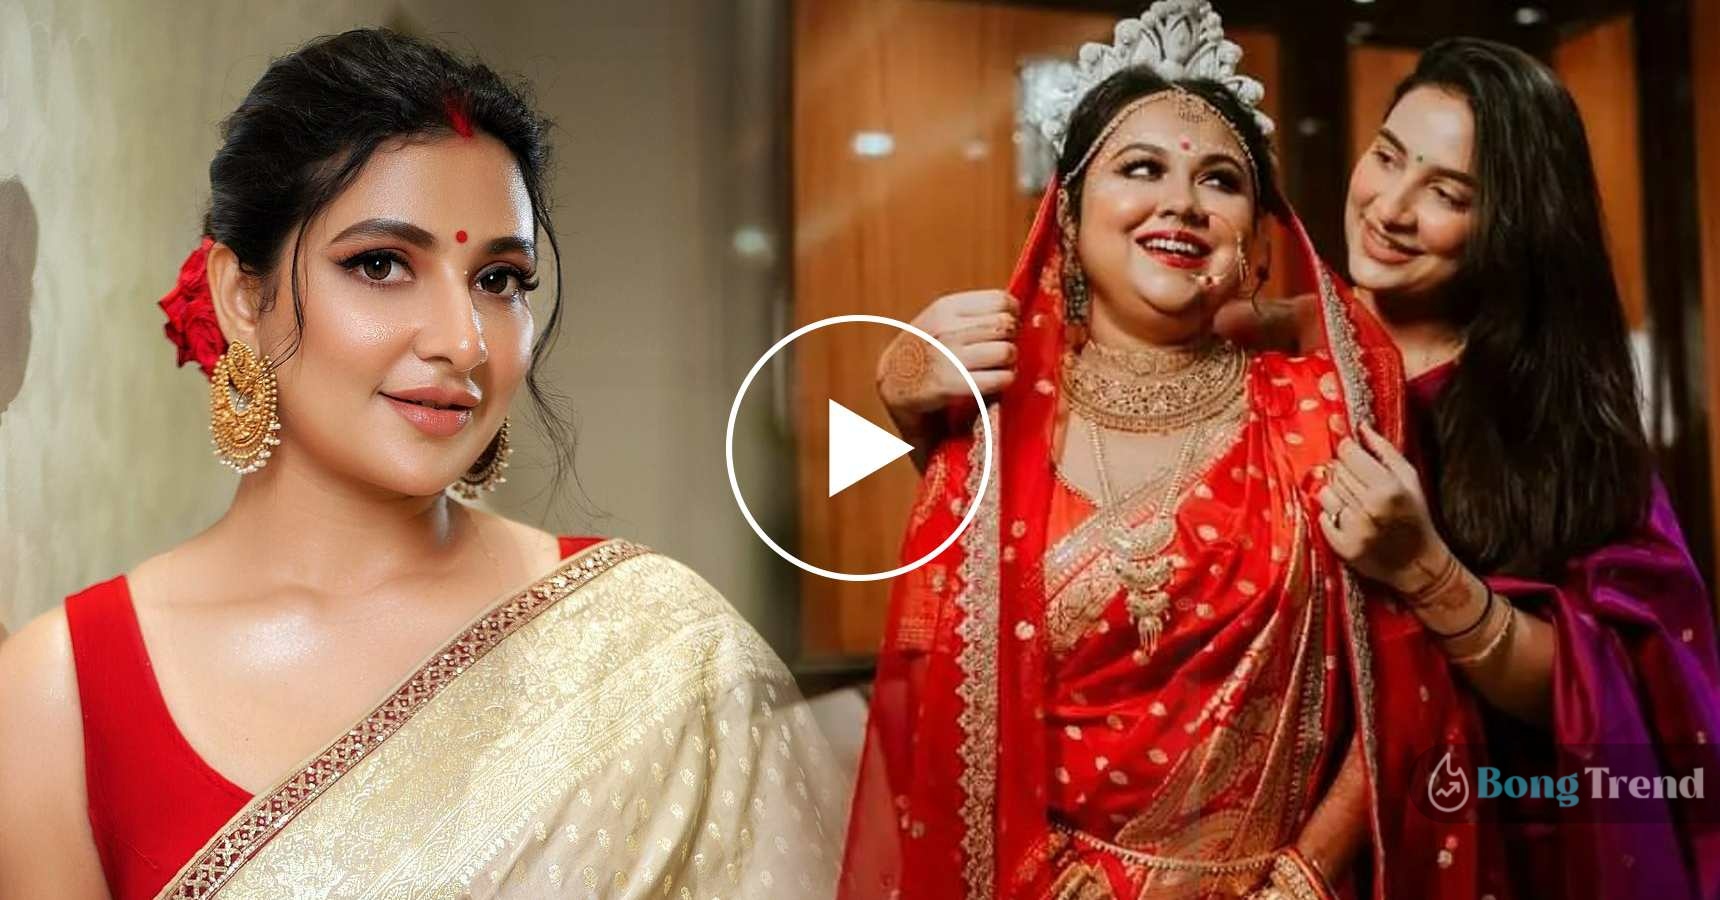 Subhashree Ganguly's best friend marriage video goes viral